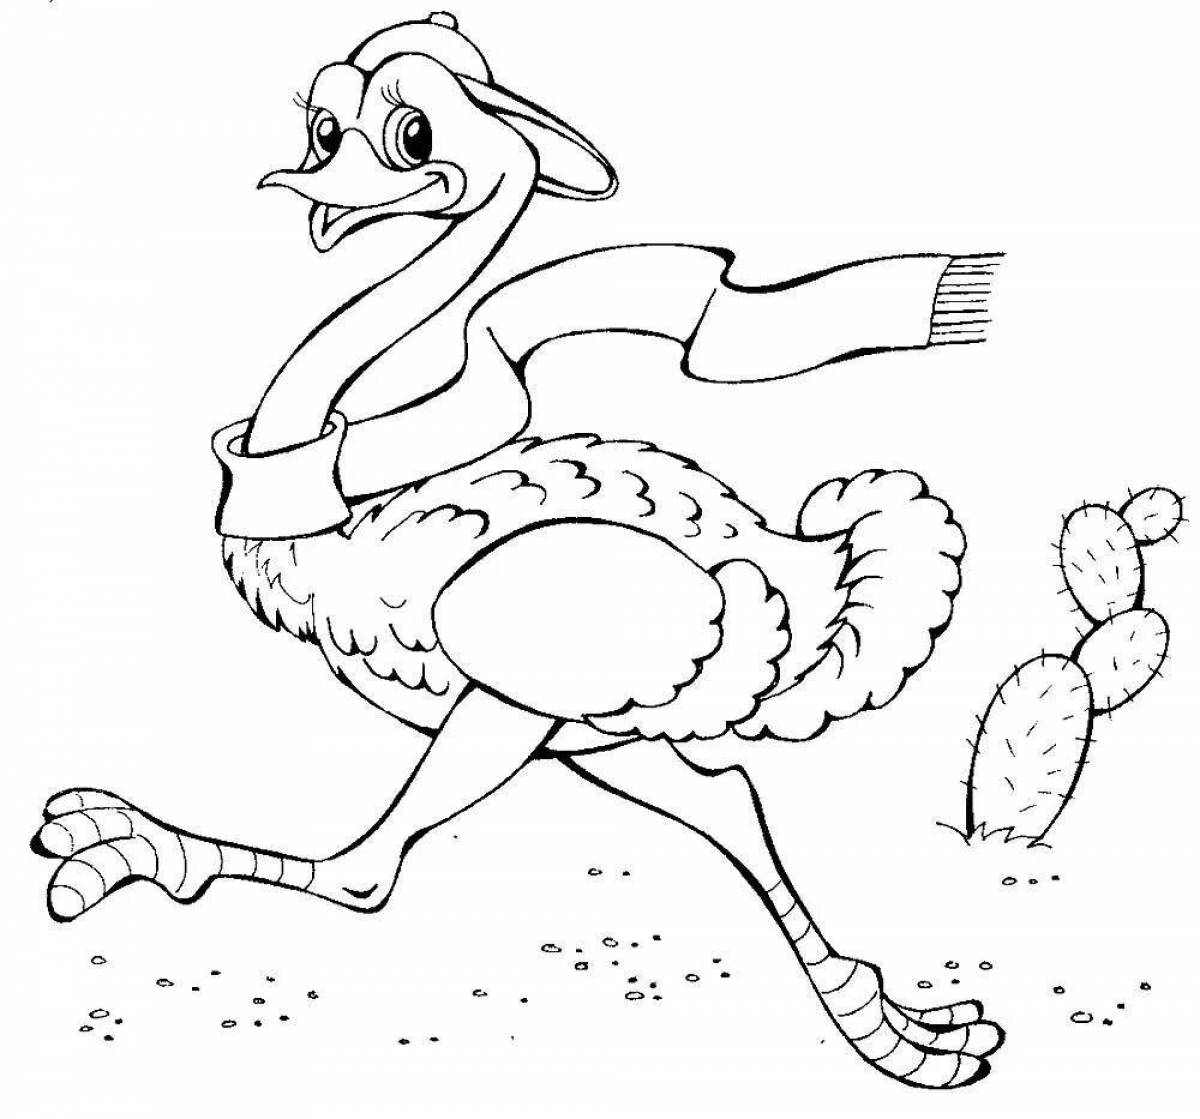 A fun ostrich coloring book for kids